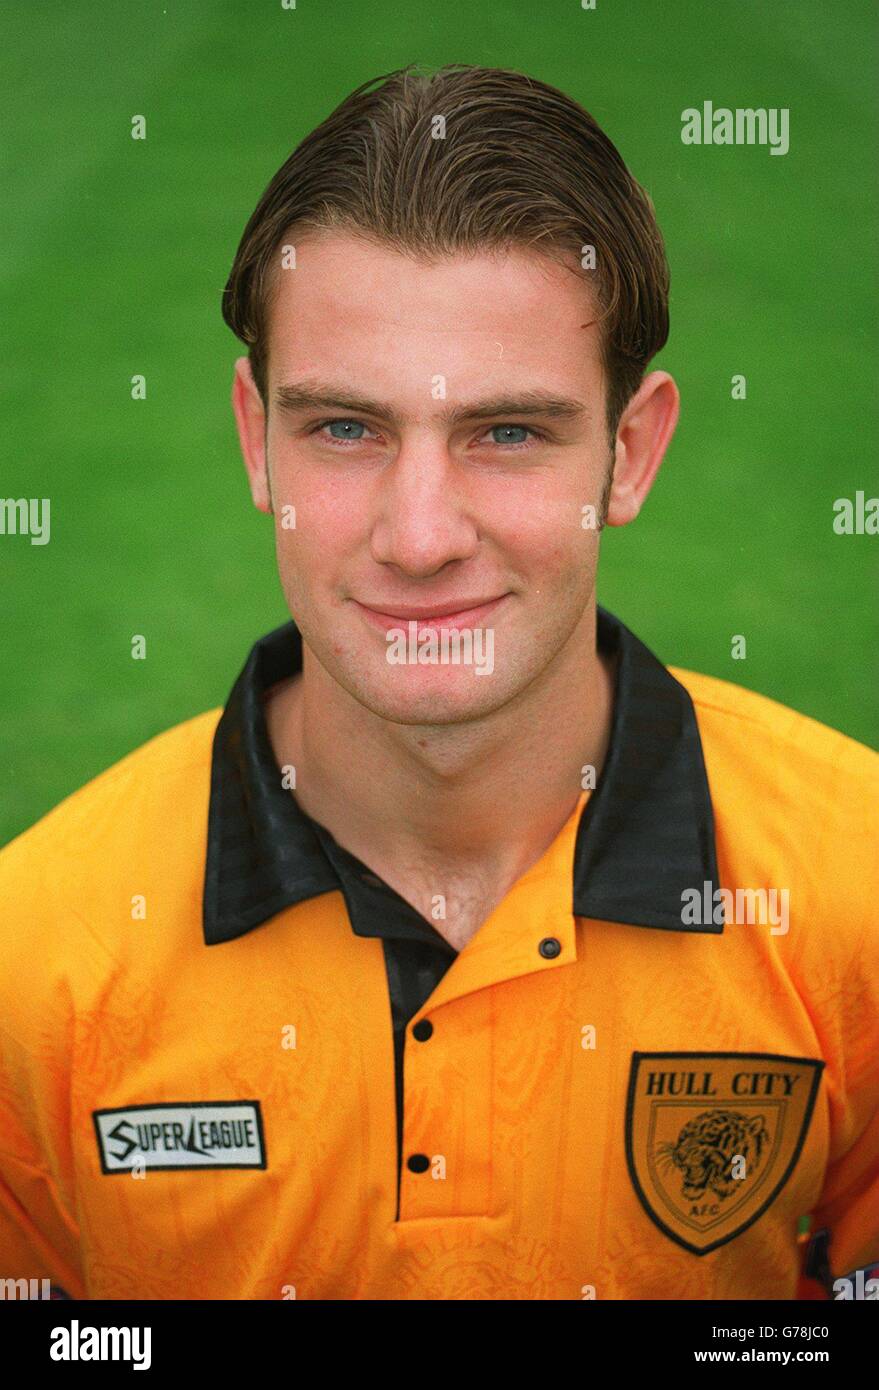 Soccer - Hull City Football Club - Season 1996/7 - Photo-call. Ian Wilkinson, Hull City Football Club Stock Photo